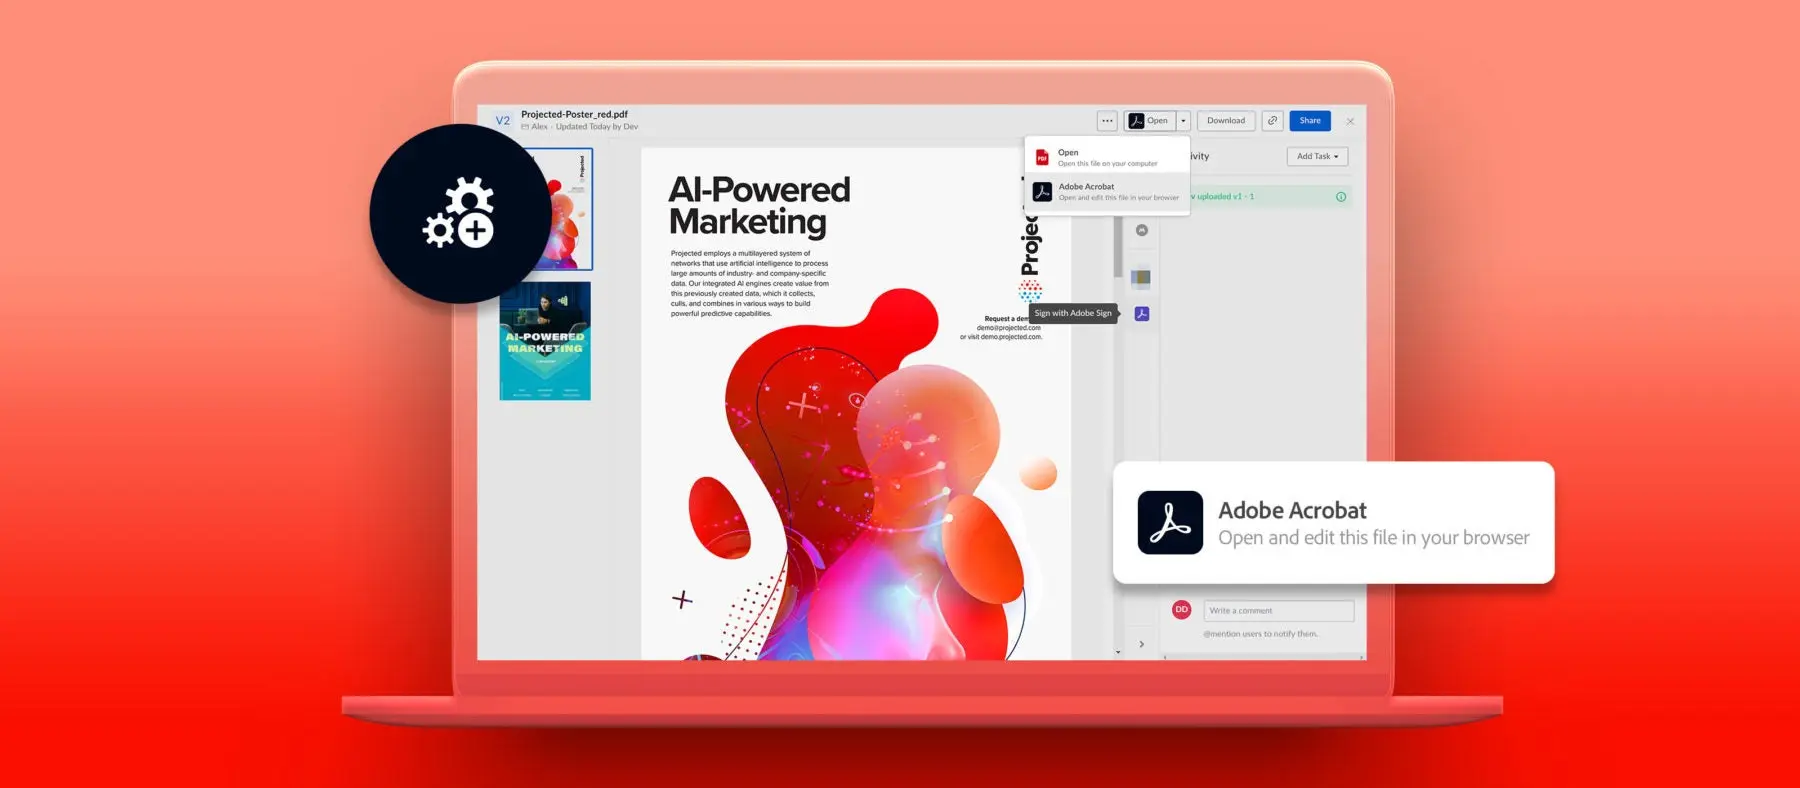 Adobe Acrobat and Box streamlining productivity